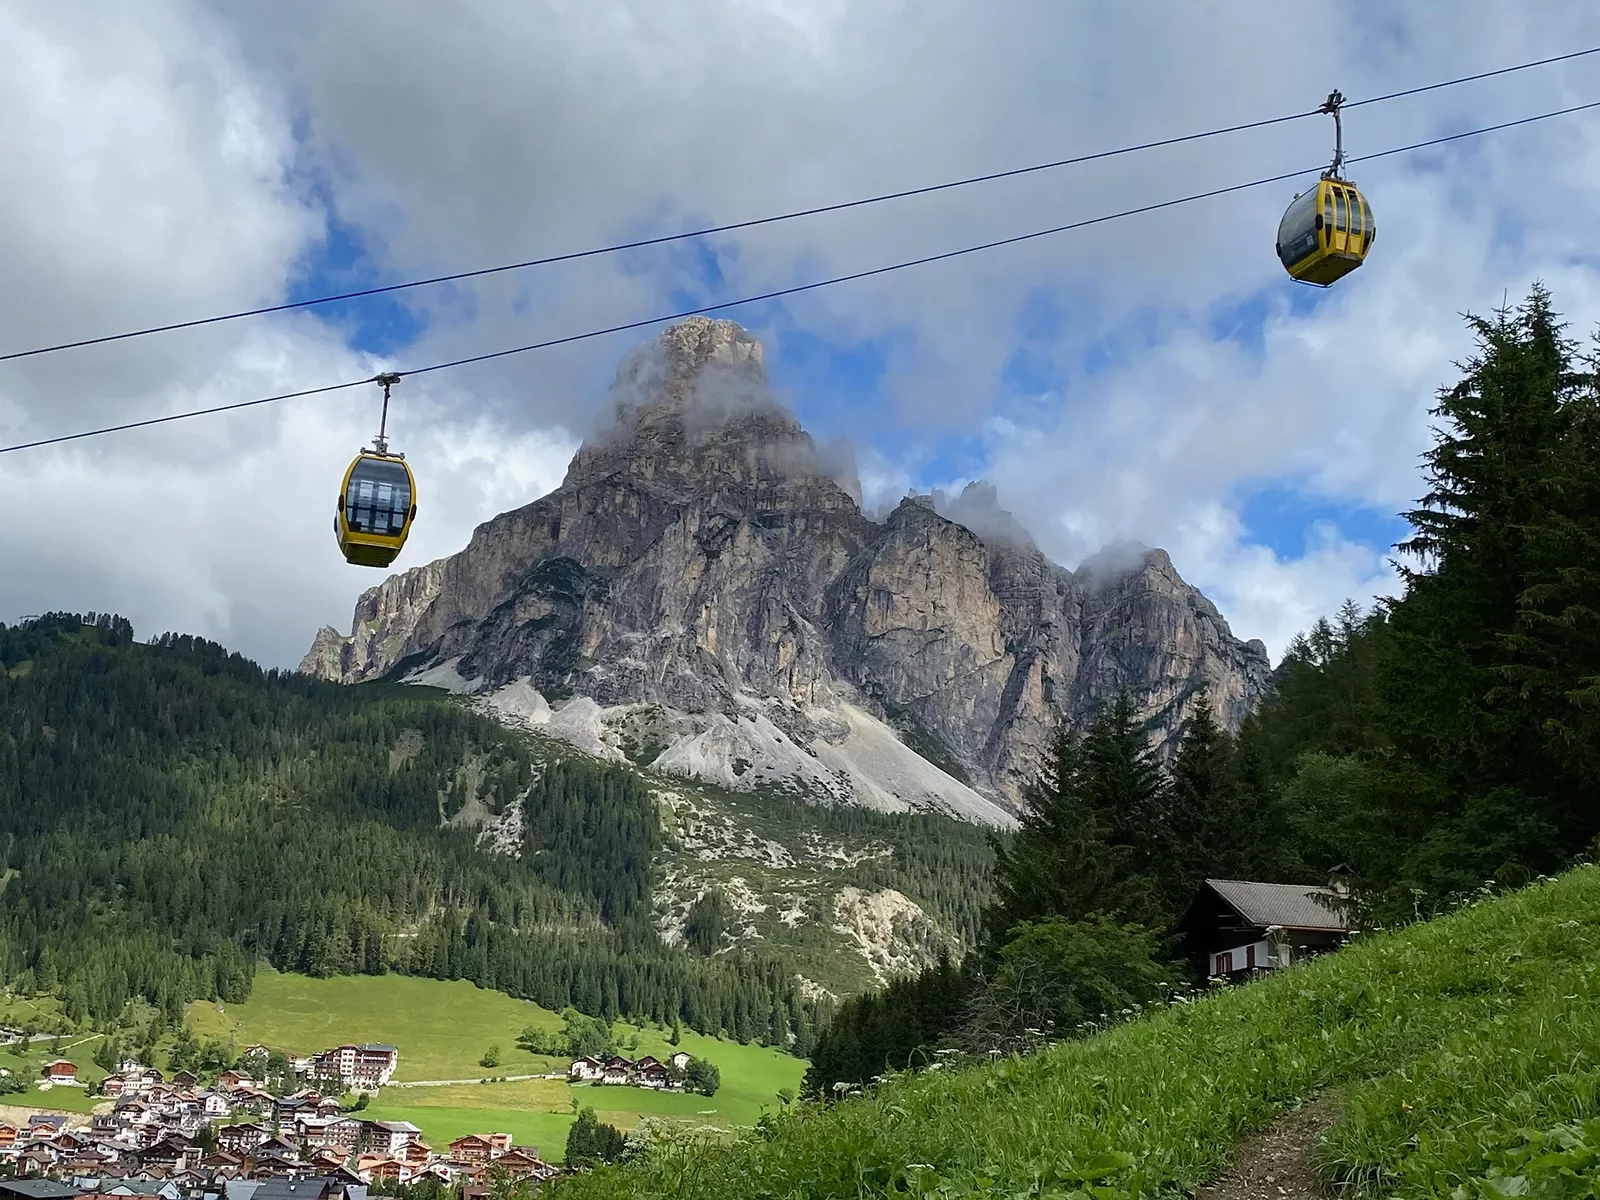 Shot of mountain village, gondola, mountain, village in distance.